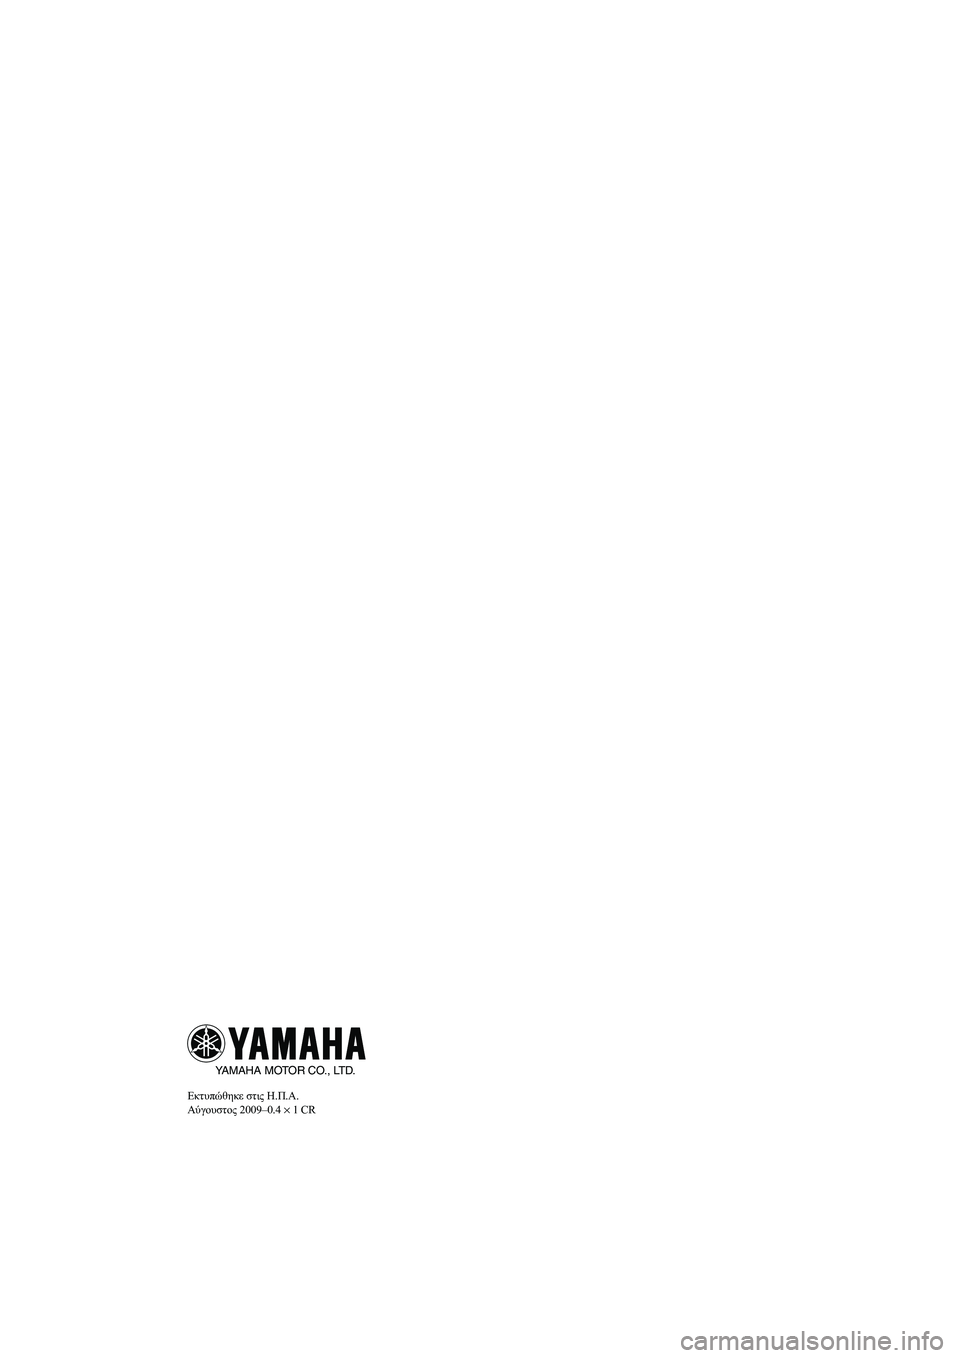 YAMAHA FZS 2010  ΟΔΗΓΌΣ ΧΡΉΣΗΣ (in Greek) YAMAHA MOTOR CO., LTD.
Εκτυπώθηκε στις Η.Π.A.
Αύγουστος 2009–0.4 × 1 CR
UF2C71R0.book  Page 1  Tuesday, July 14, 2009  11:00 AM 